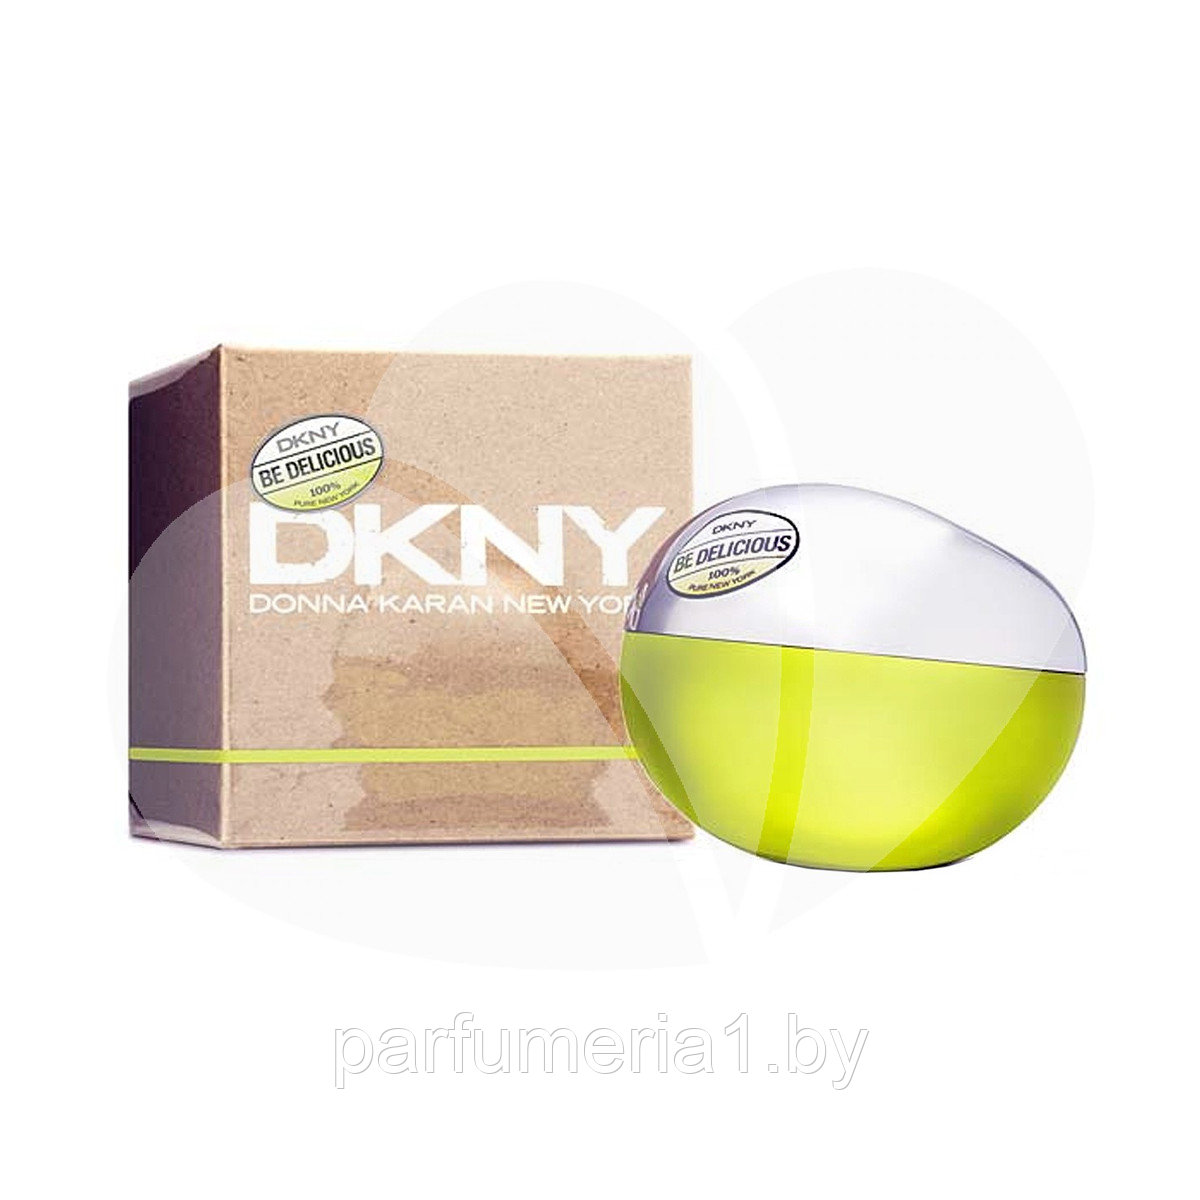 Donna karan dkny be delicious. DKNY духи зеленое яблоко 100 мл. Донна Каран Нью Йорк би Делишес. Духи DKNY be delicious.